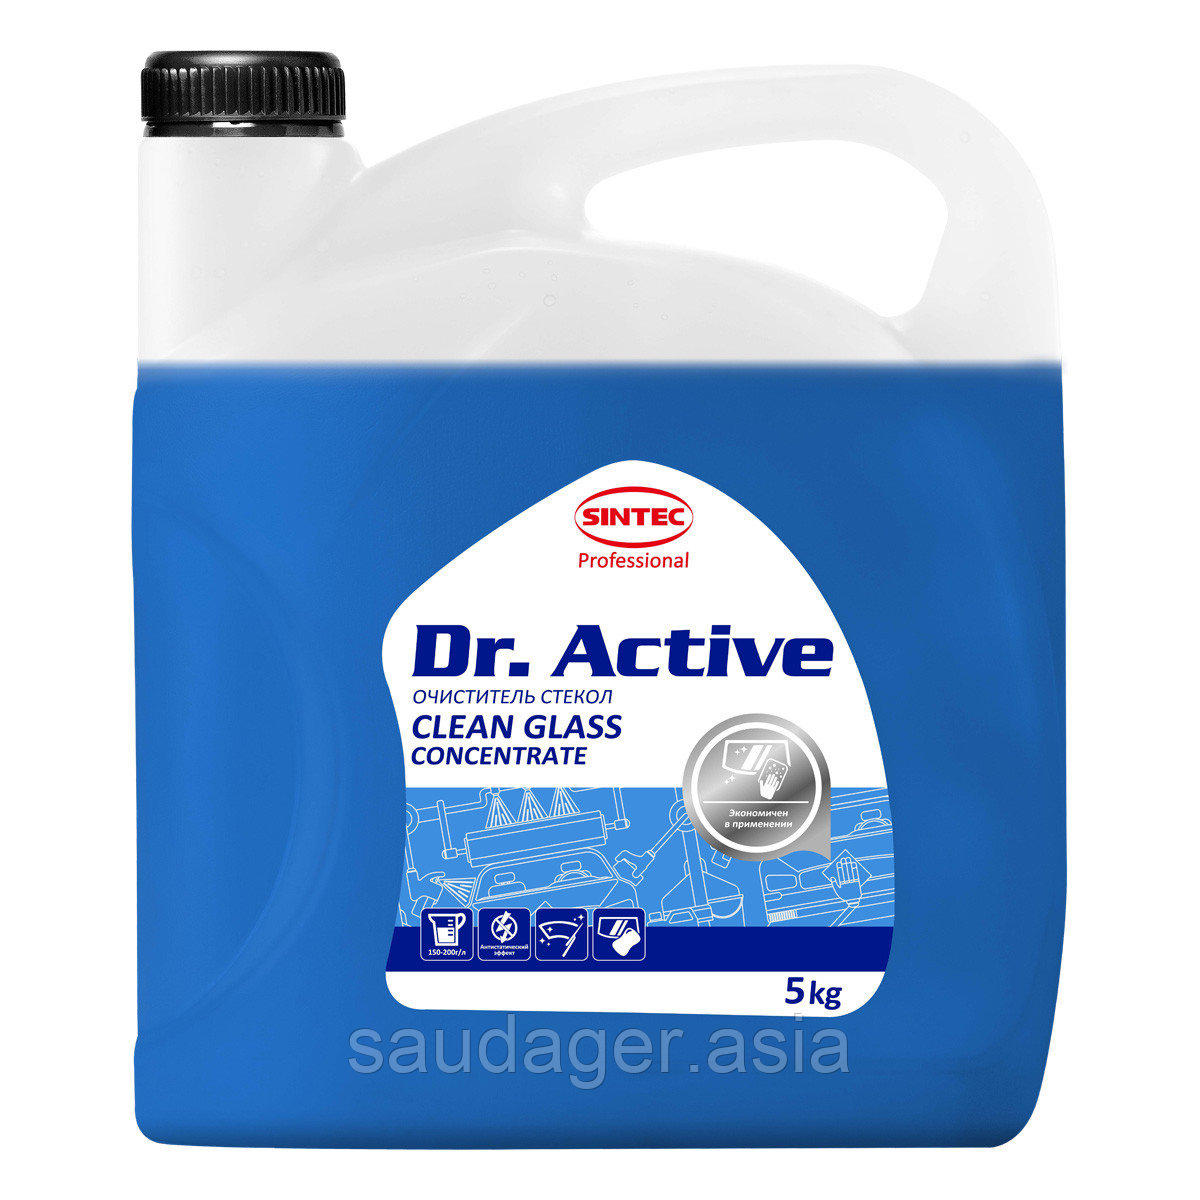 Sintec Dr. Active Очиститель стекол "Clean Glass Concentrate"  (5 кг)